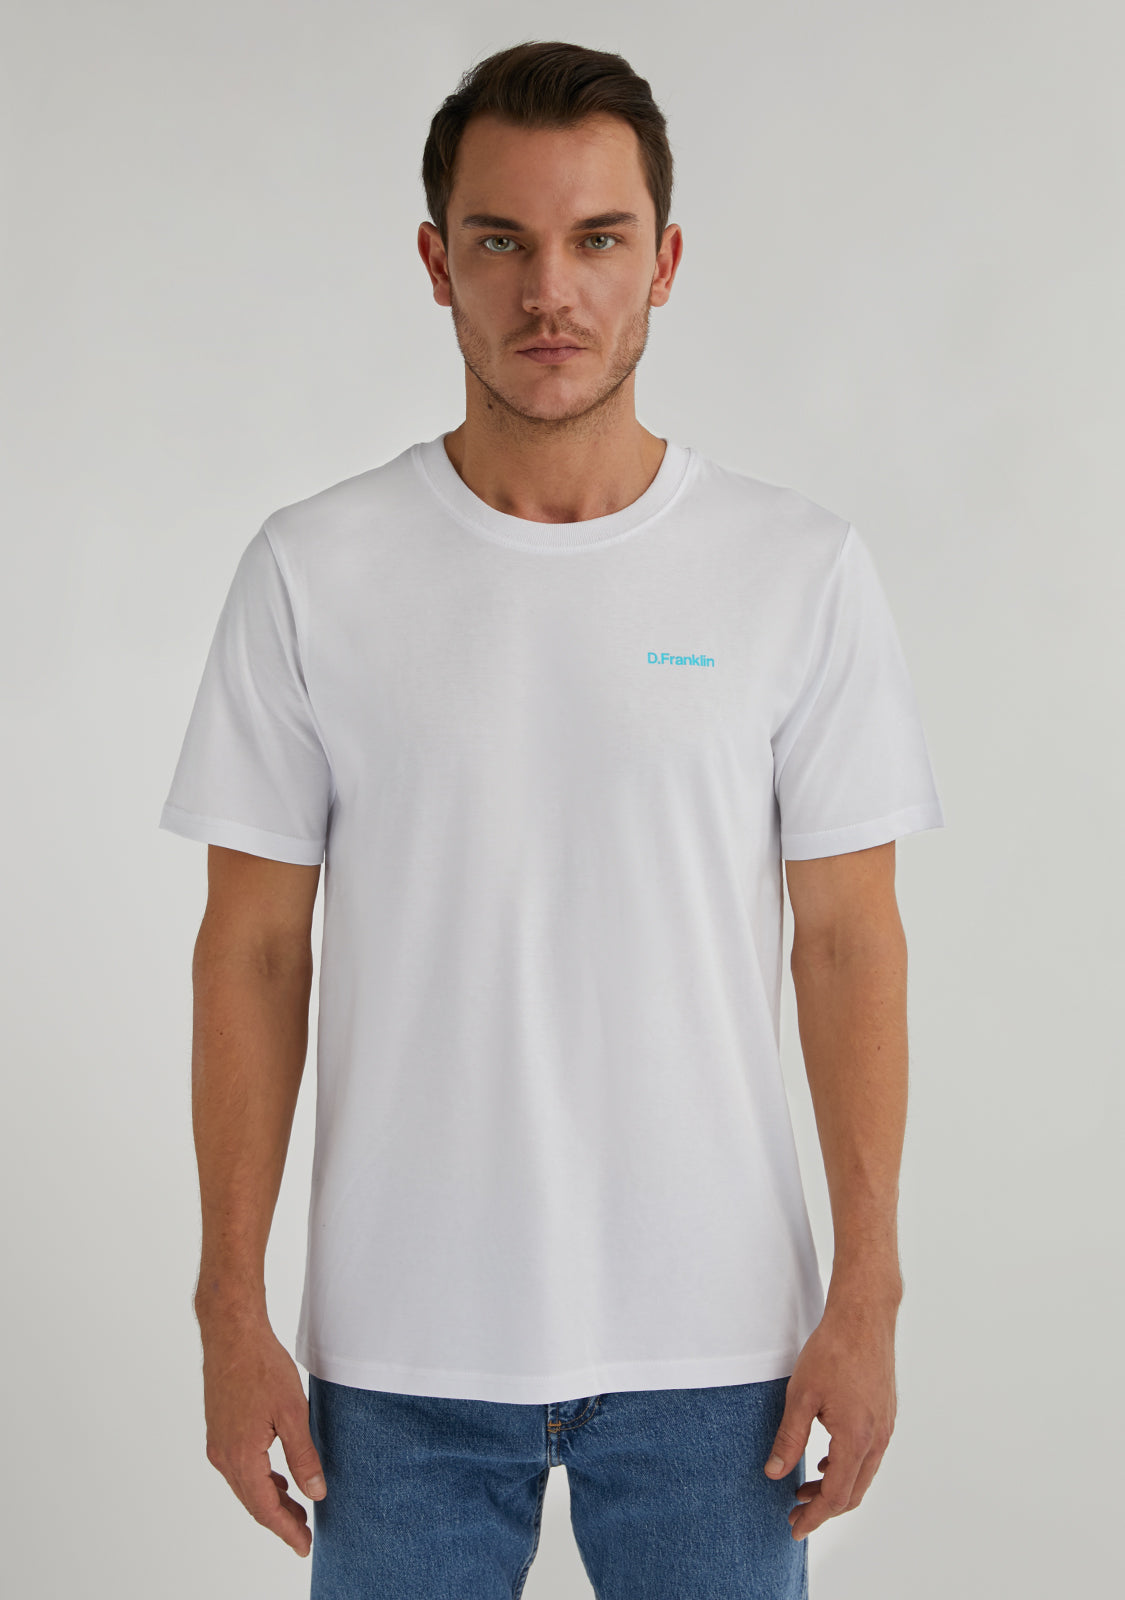 Social Club T-Shirt White / Blue